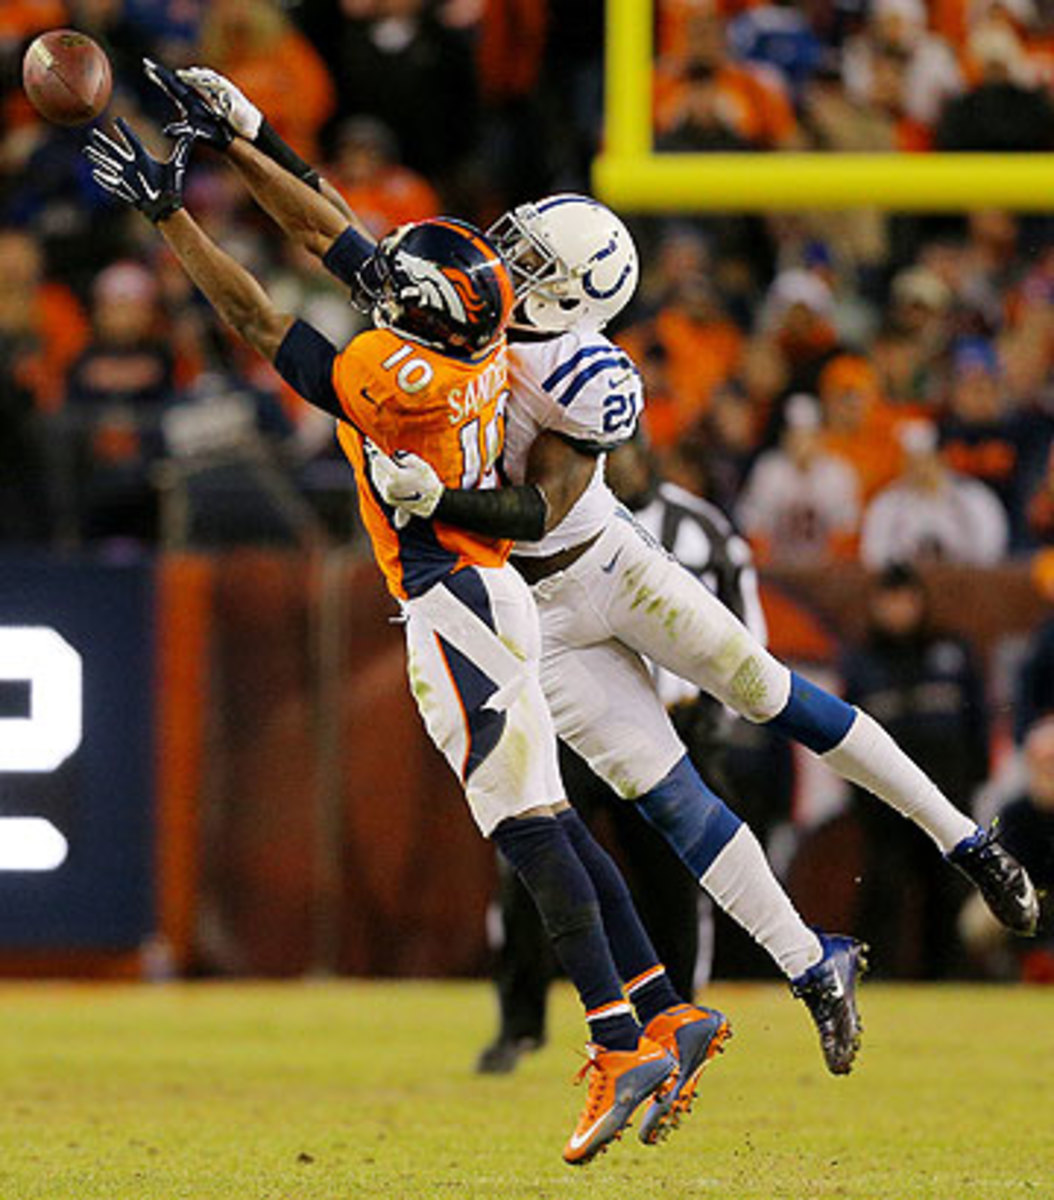 Colts cornerback Vontae Davis had five passes defensed in Sunday's win. (Justin Edmonds/Getty Images)